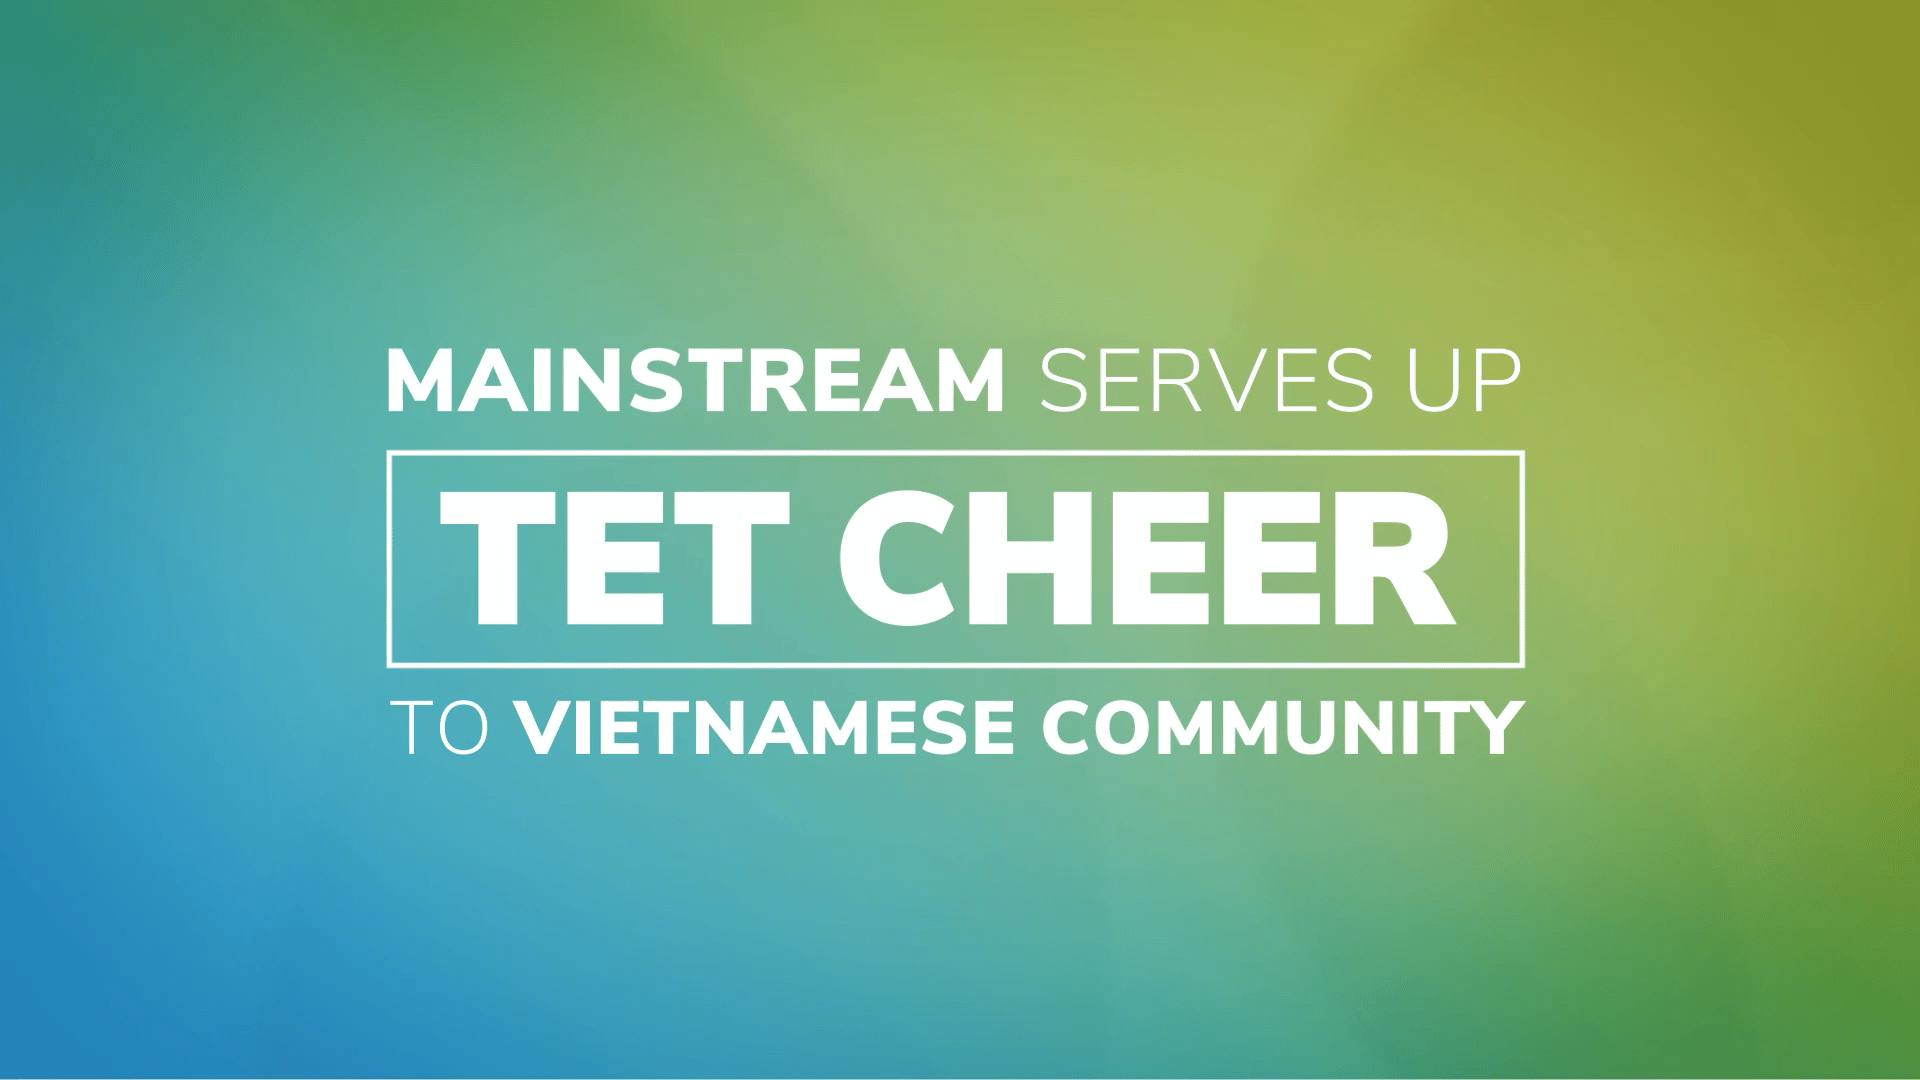 'Mainstream serves up Tet Cheer to Vietnamese community' video thumbnail